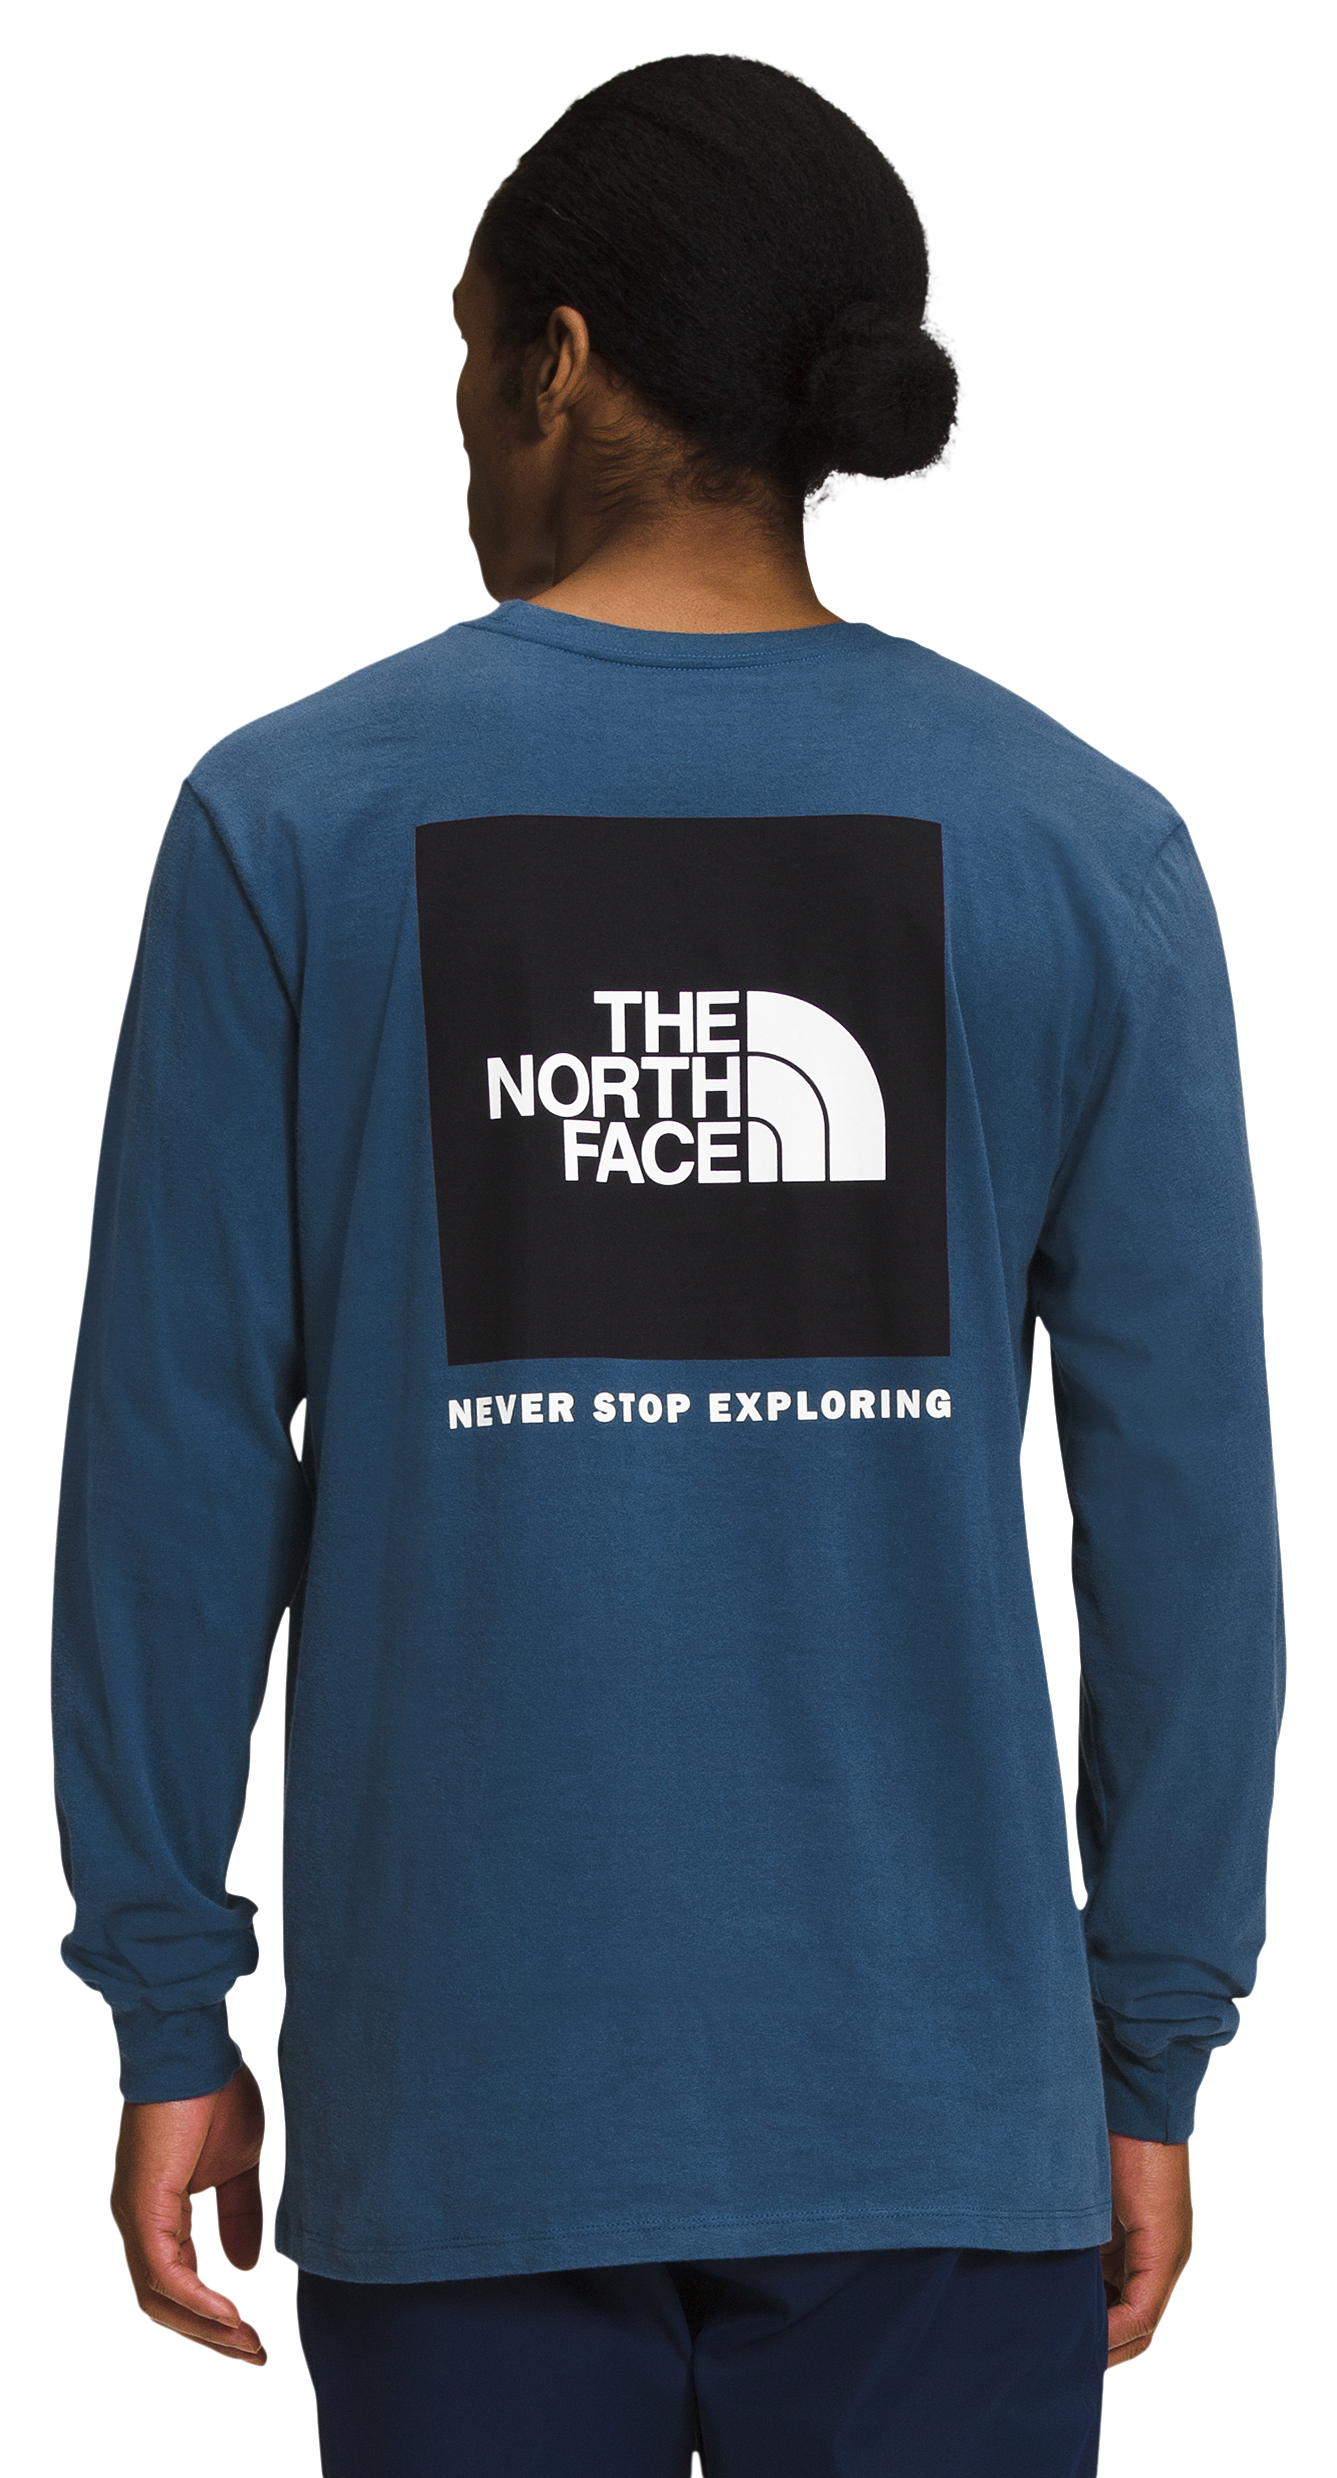 The North Face Box NSE Long-Sleeve Shirt for Men - Shady Blue/TNF Black - M